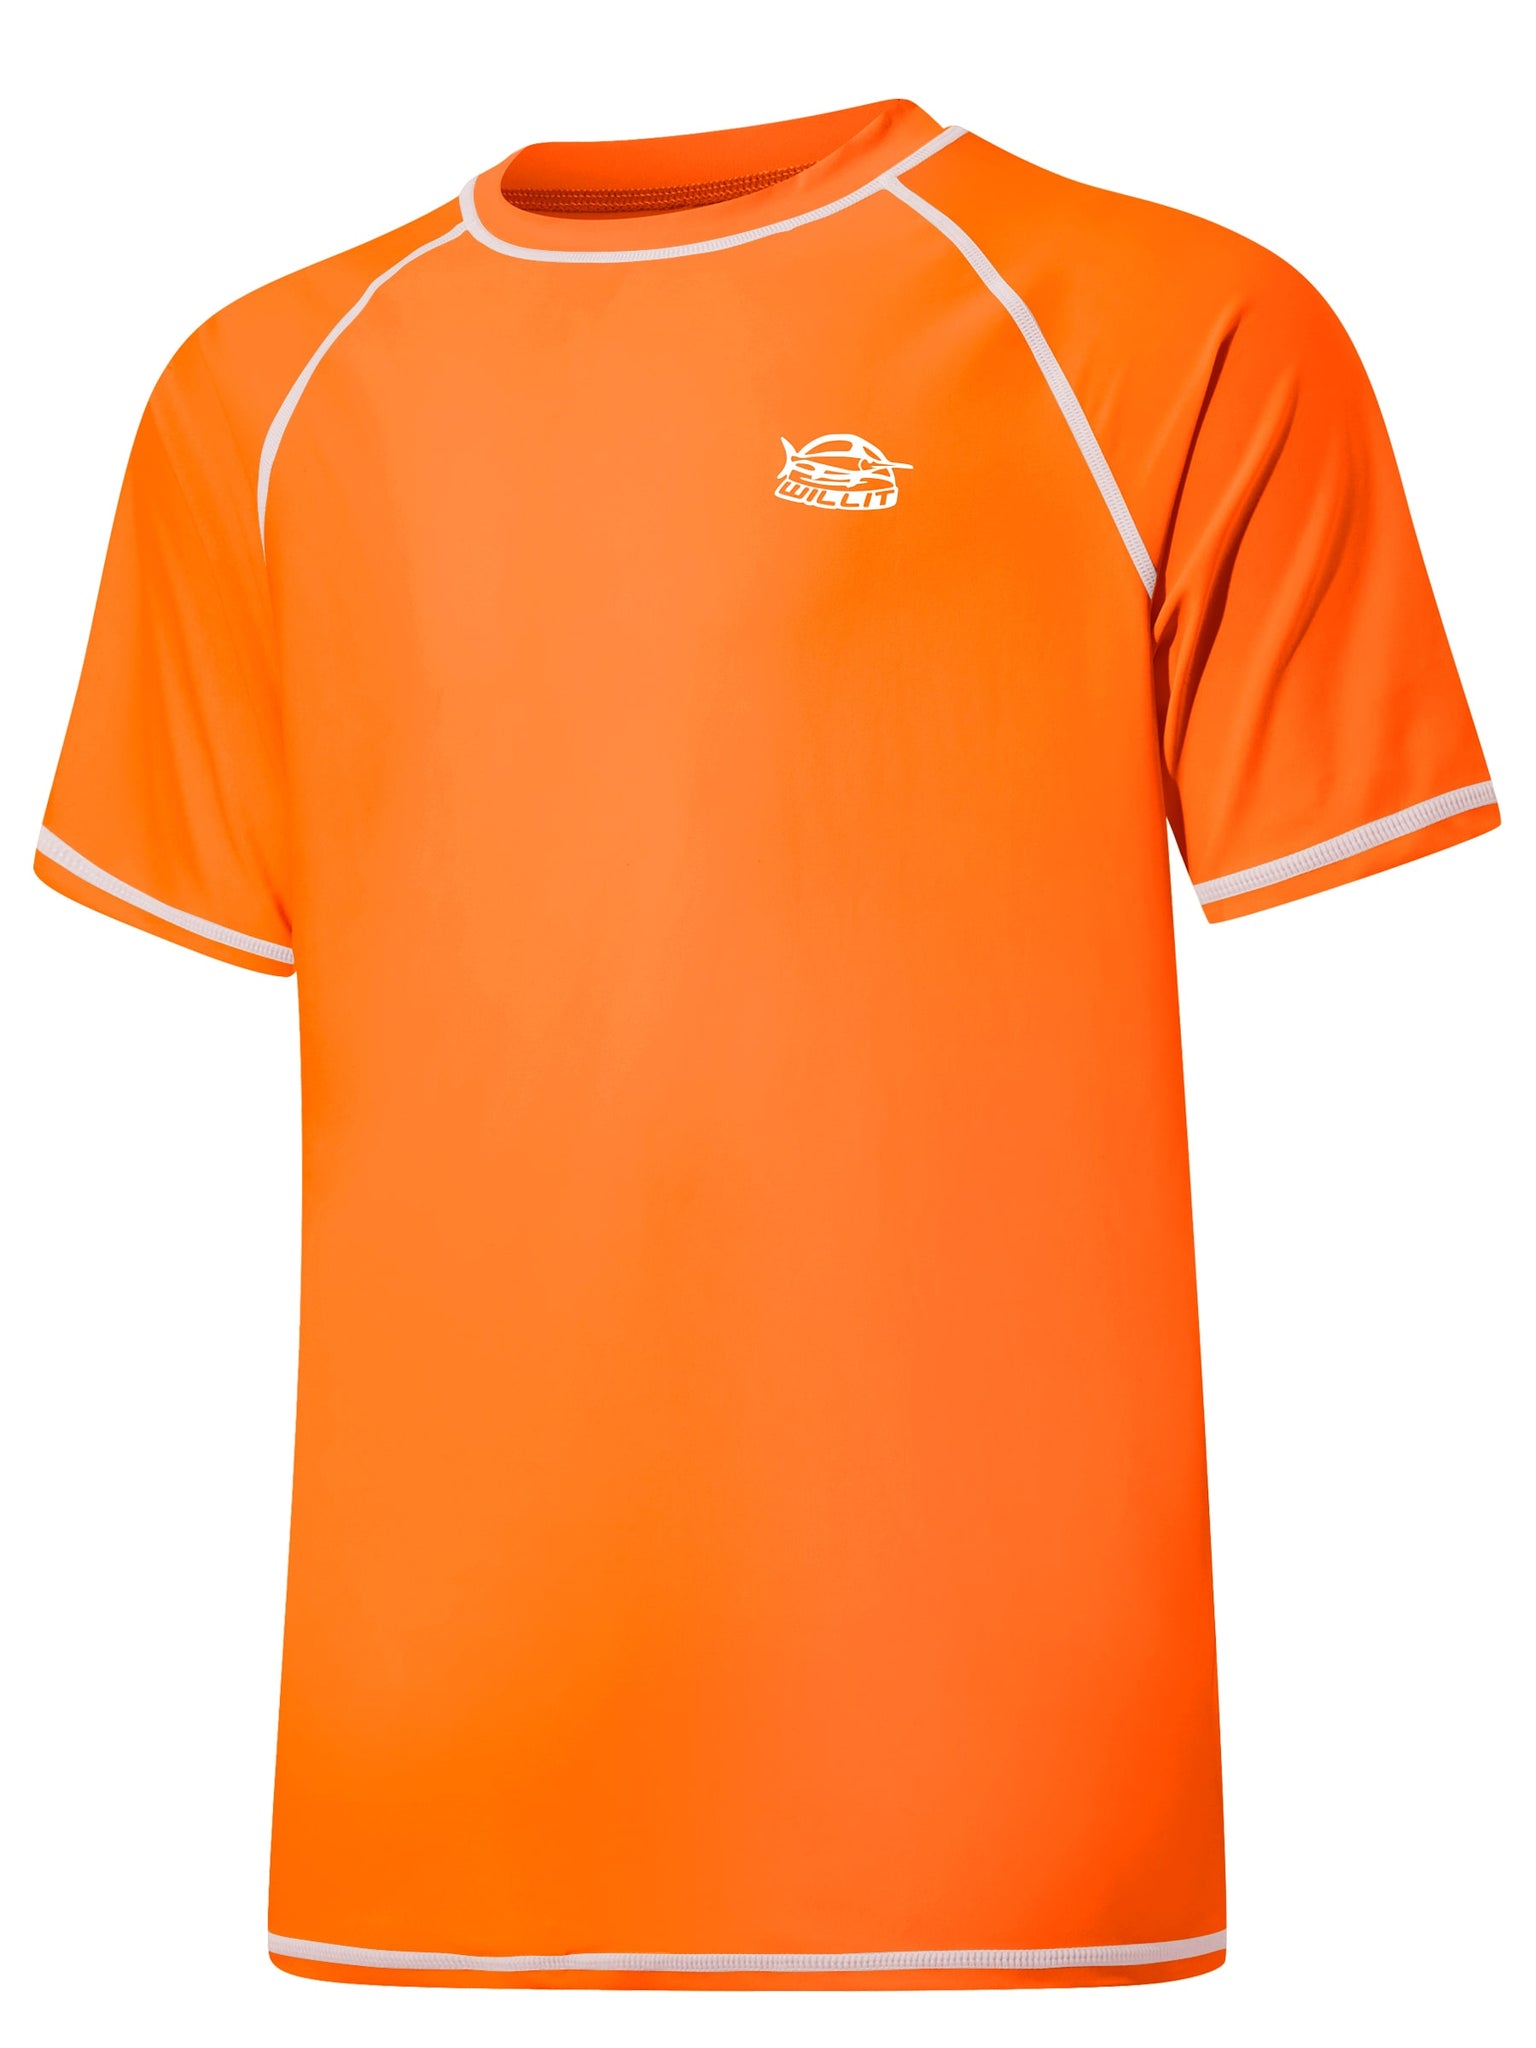 Men's Sun Protection Short Sleeve Shirt_Orange_laydown1